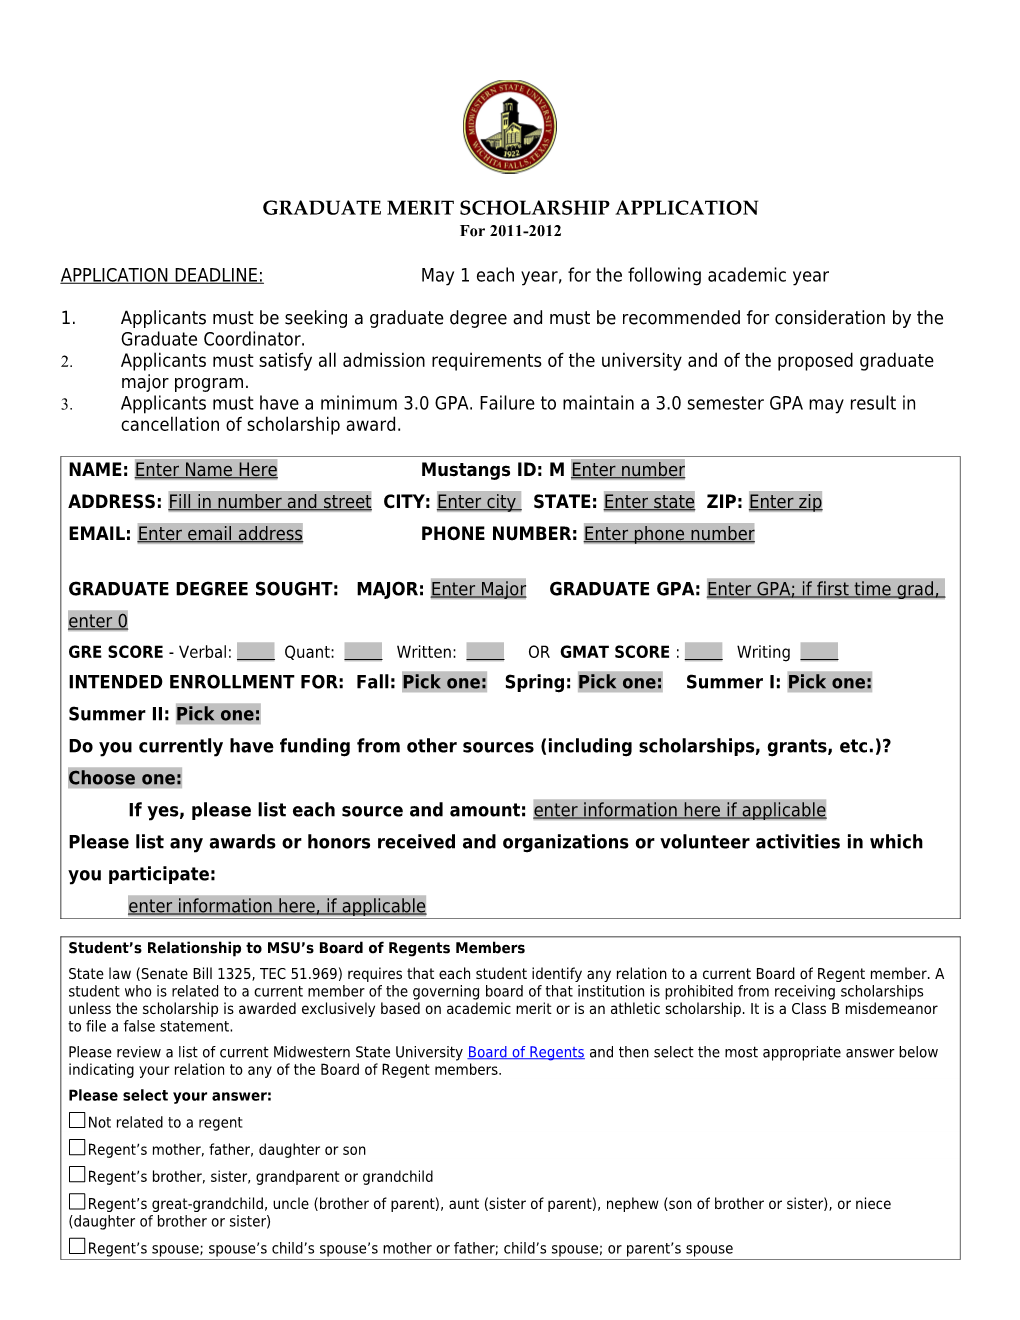 Graduate Merit Scholarship Application